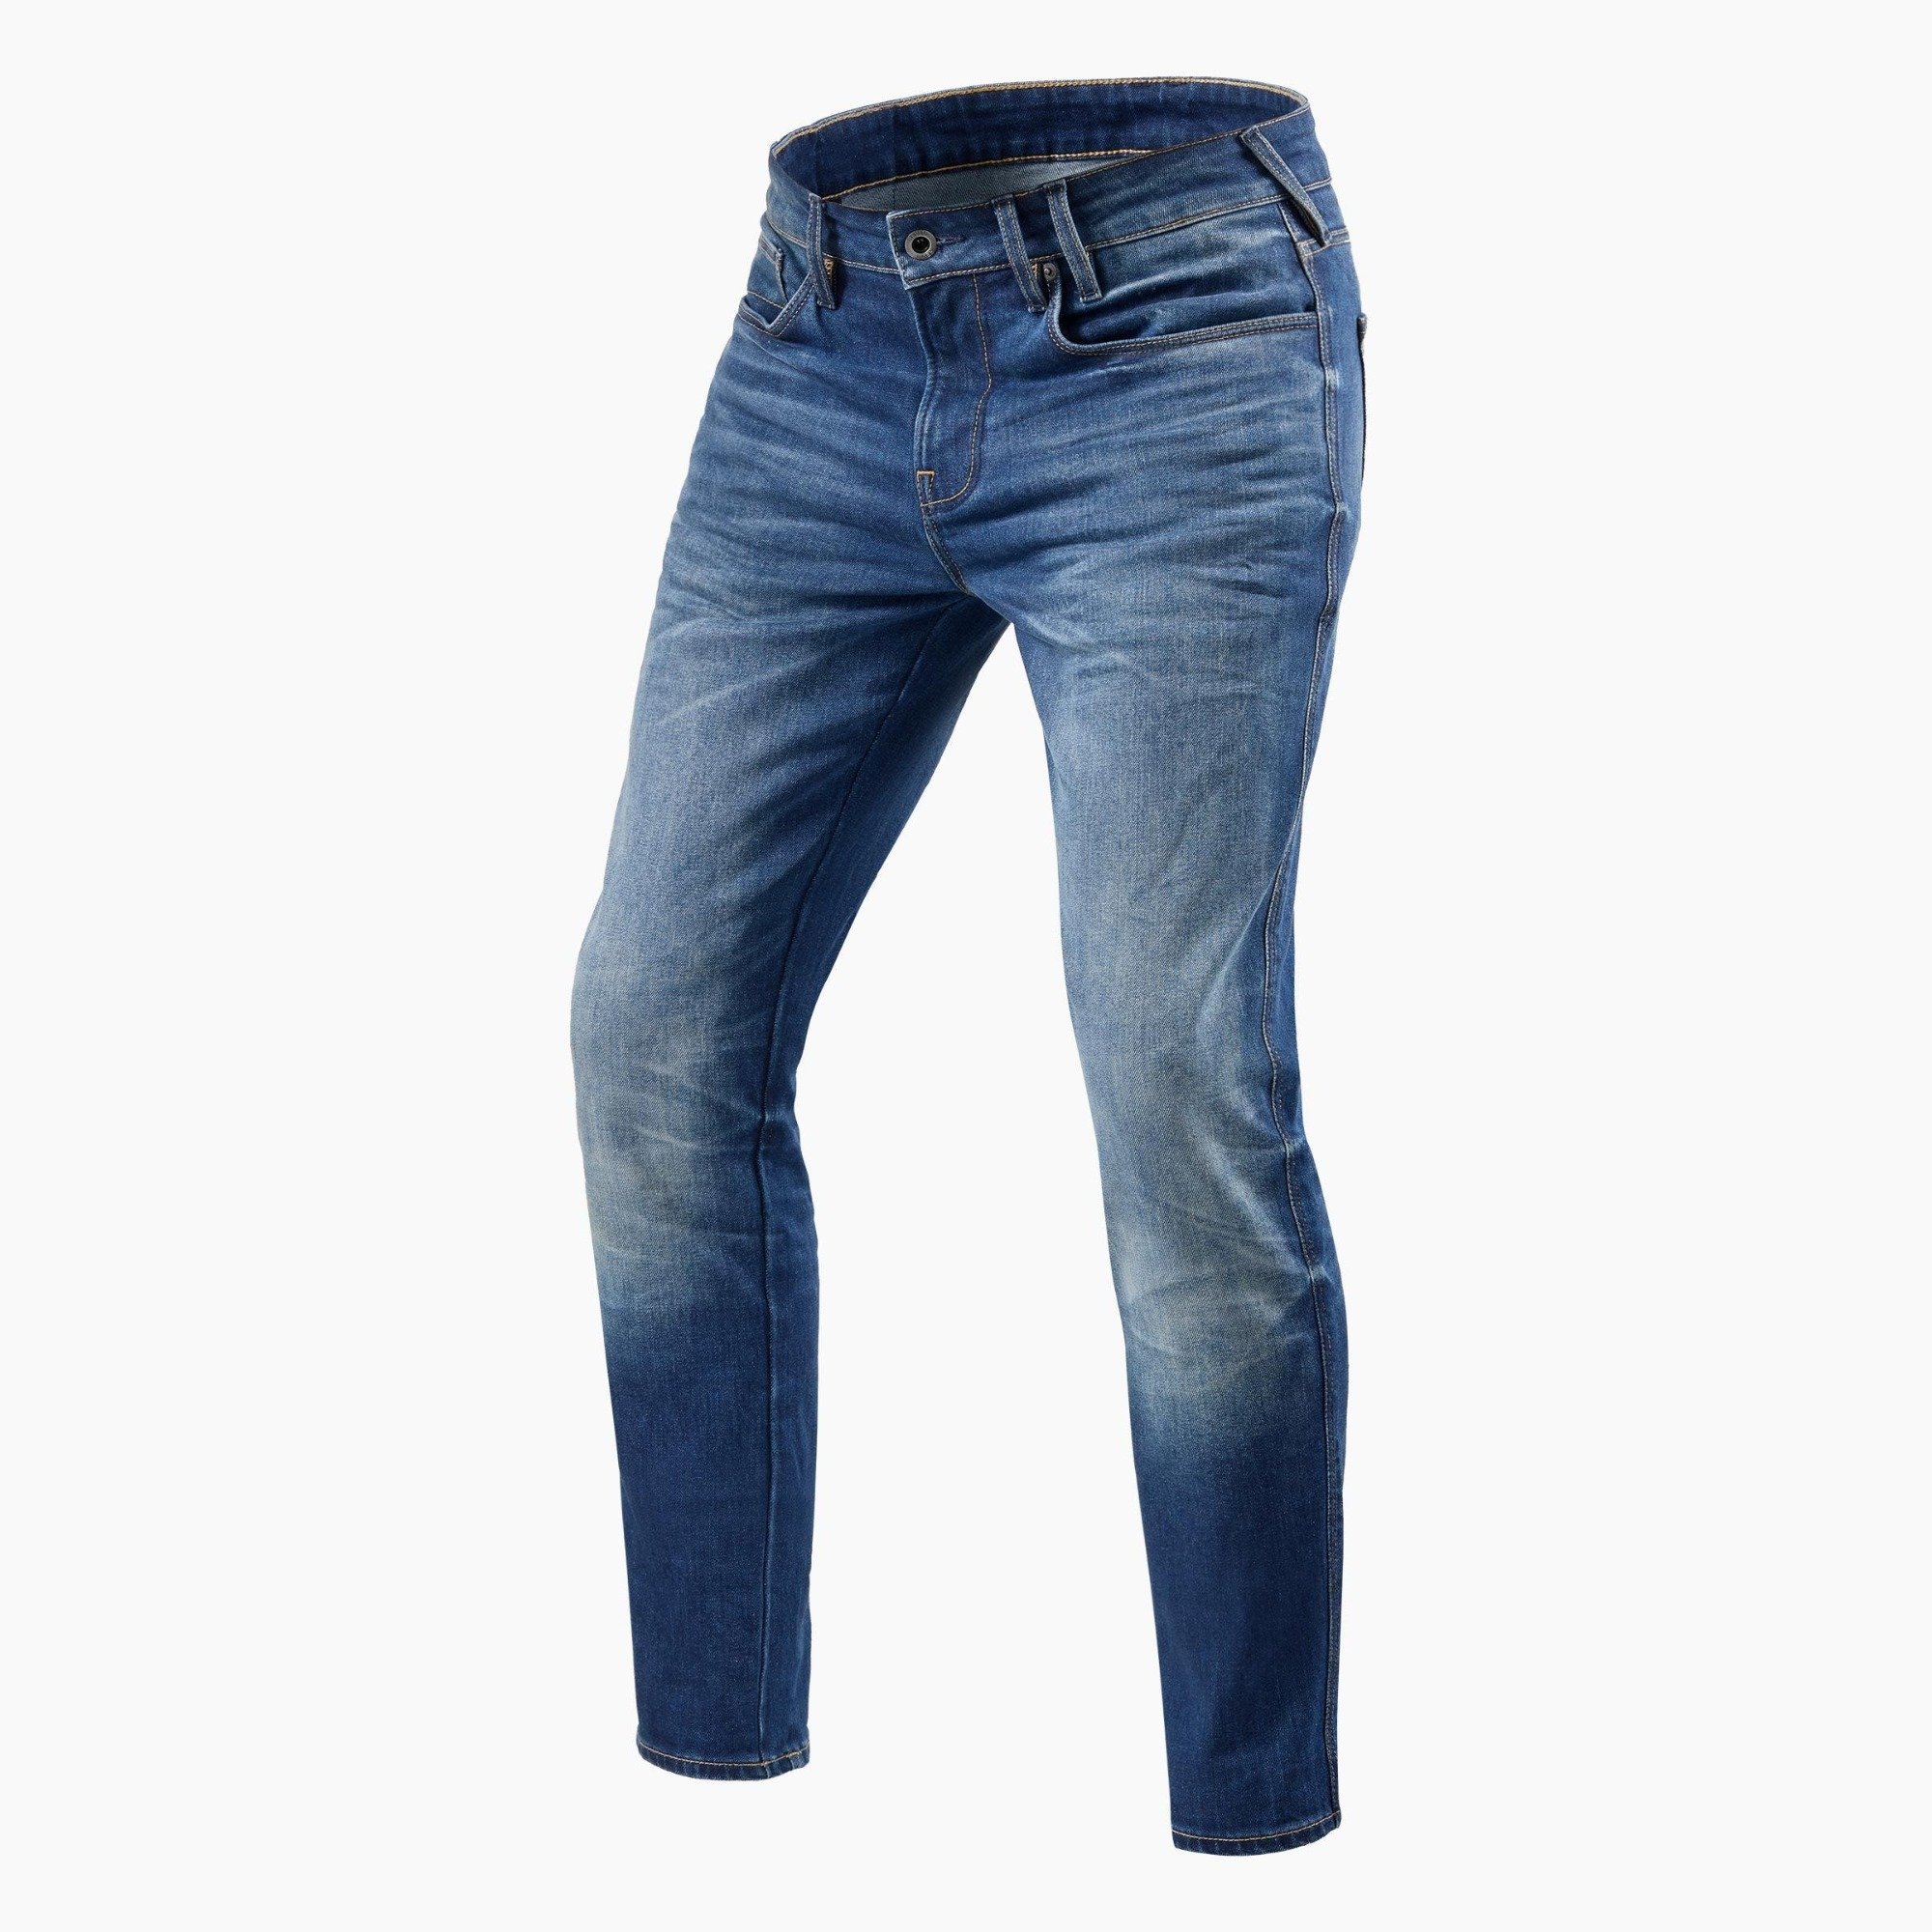 Image of REV'IT! Jeans Carlin SK Mid Blue Used Motorcycle Jeans Size L36/W31 EN